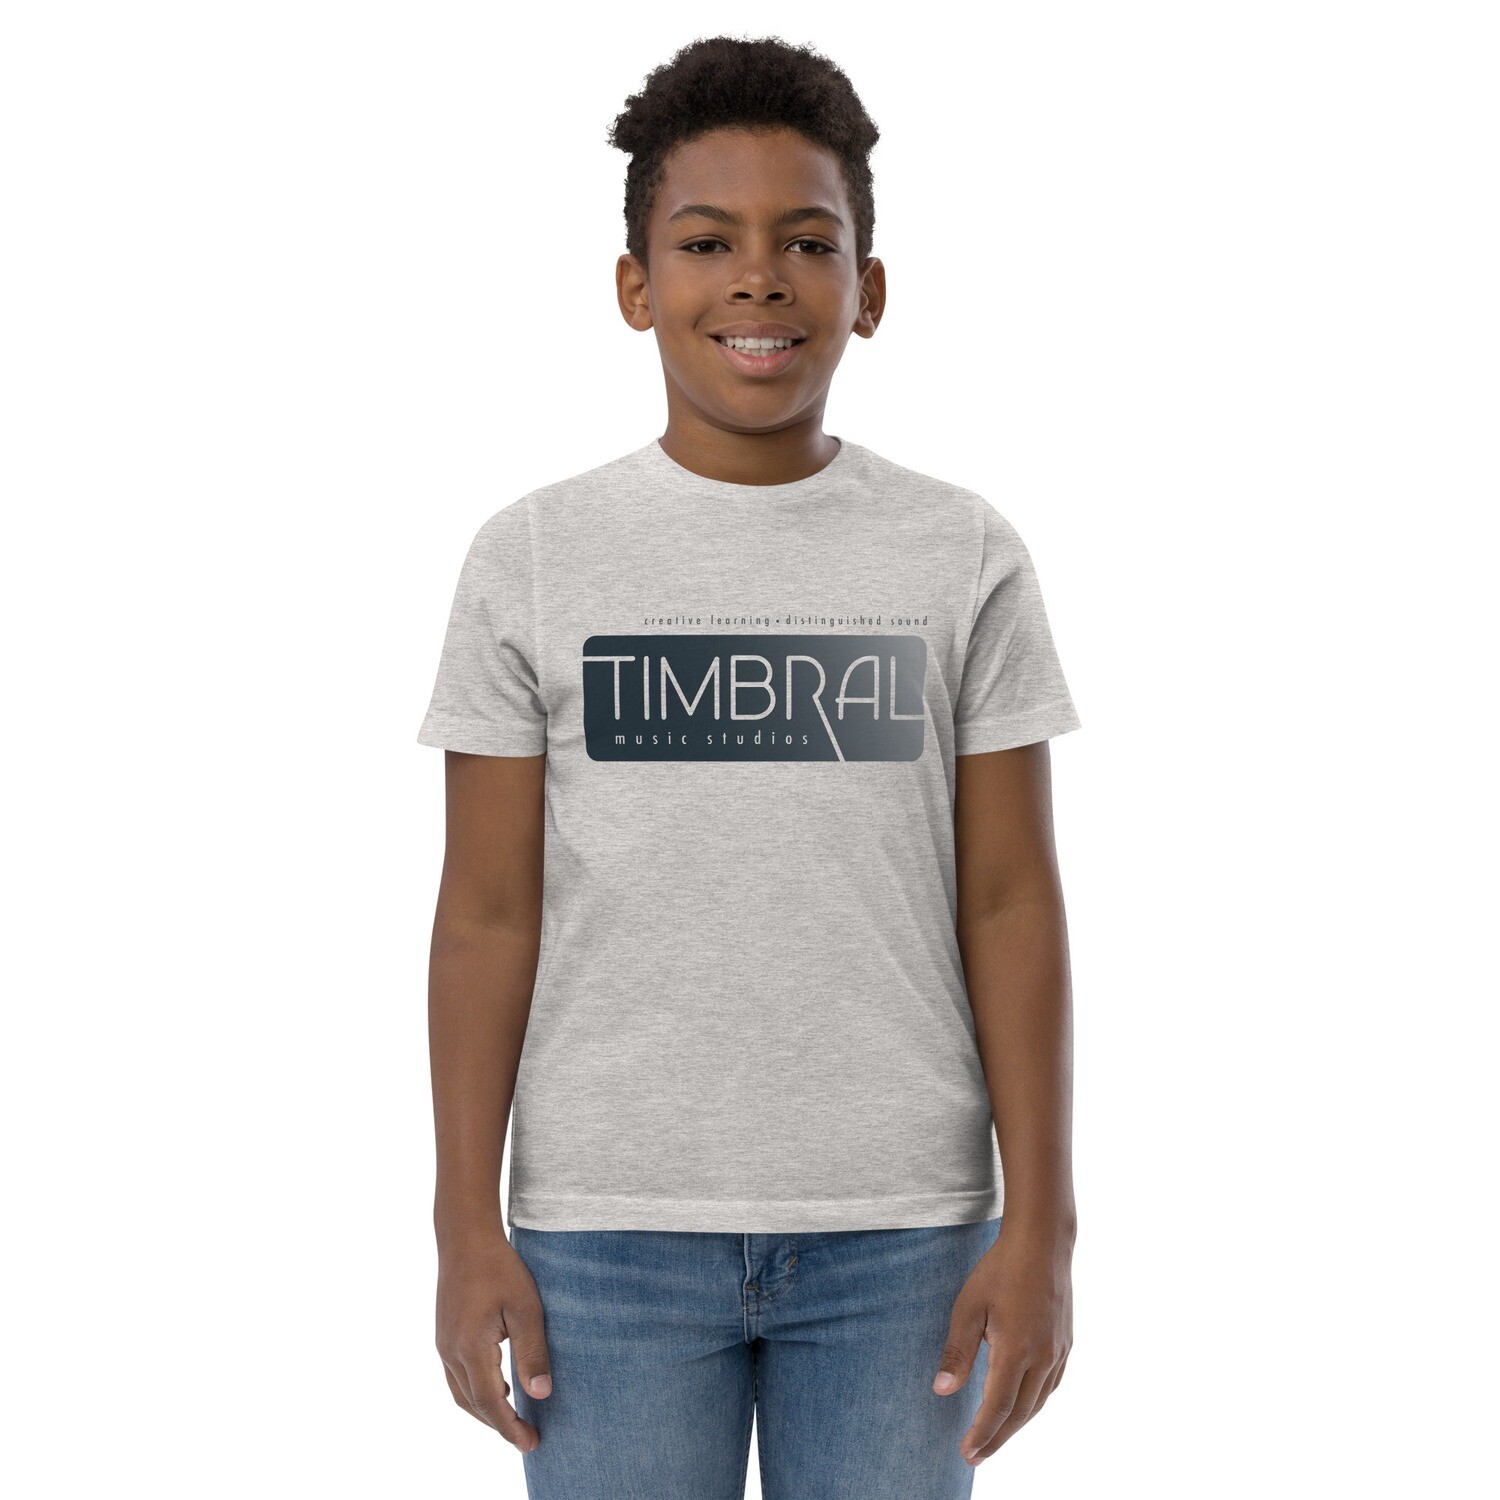 Timbral Youth T-shirt